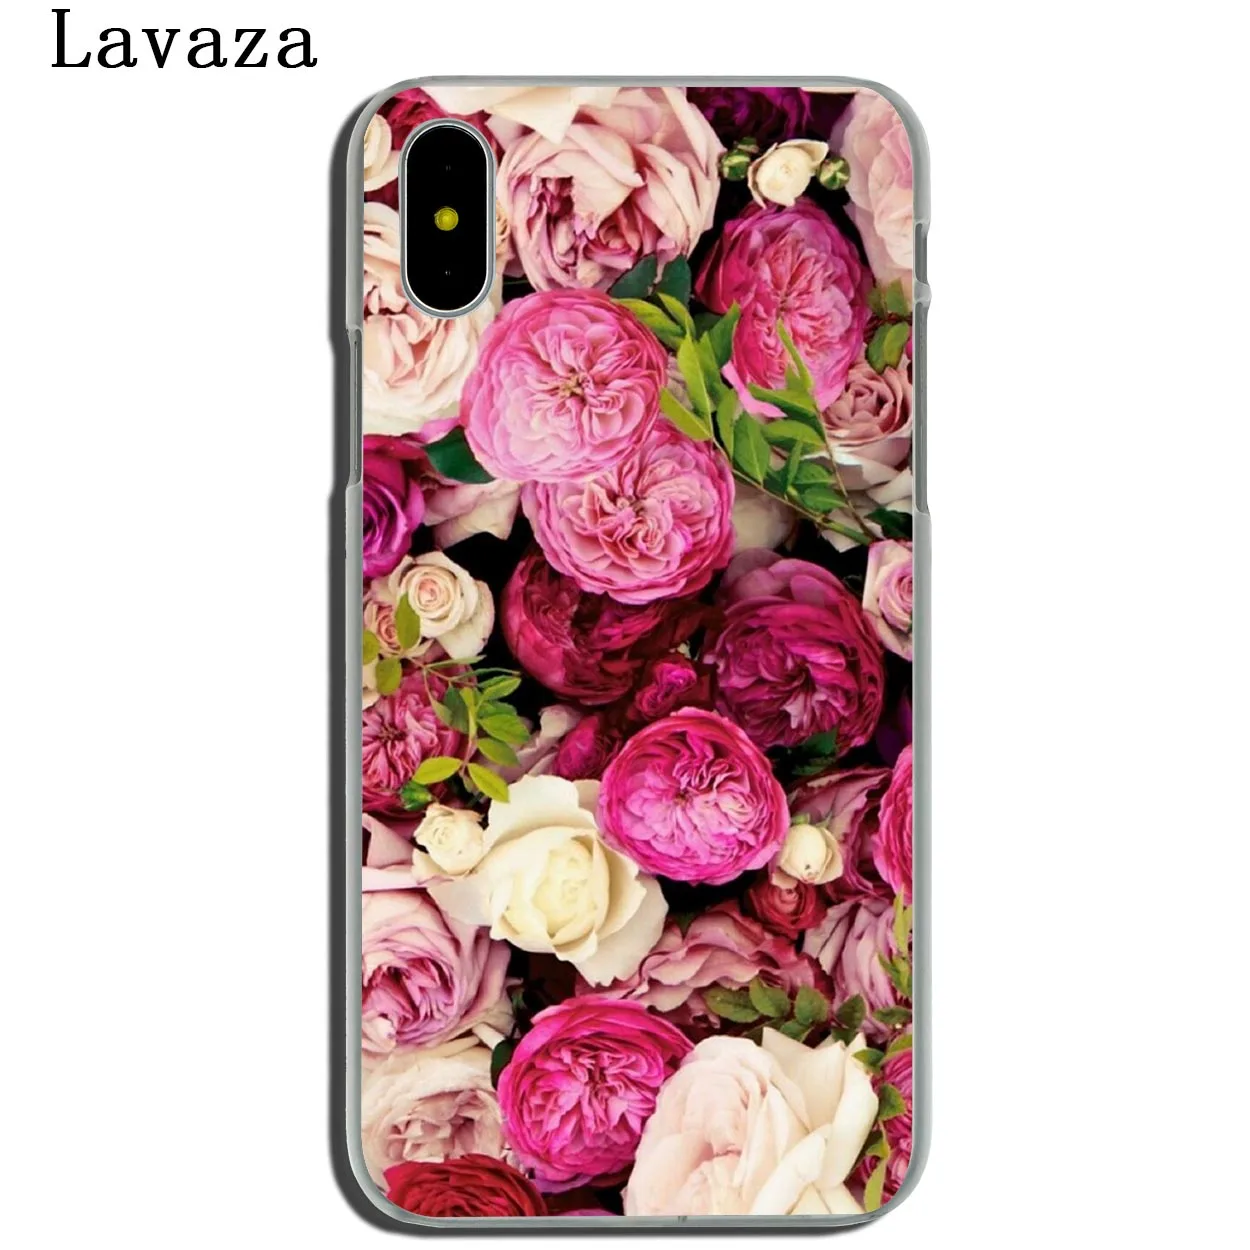 Lavaza пион ромашка кактус, листья растения цветок чехол для телефона для iPhone X 8 7 6 6S Plus 5 5S SE 5C 4 4S Sunflowe Роза Слива 8 10 - Цвет: 4